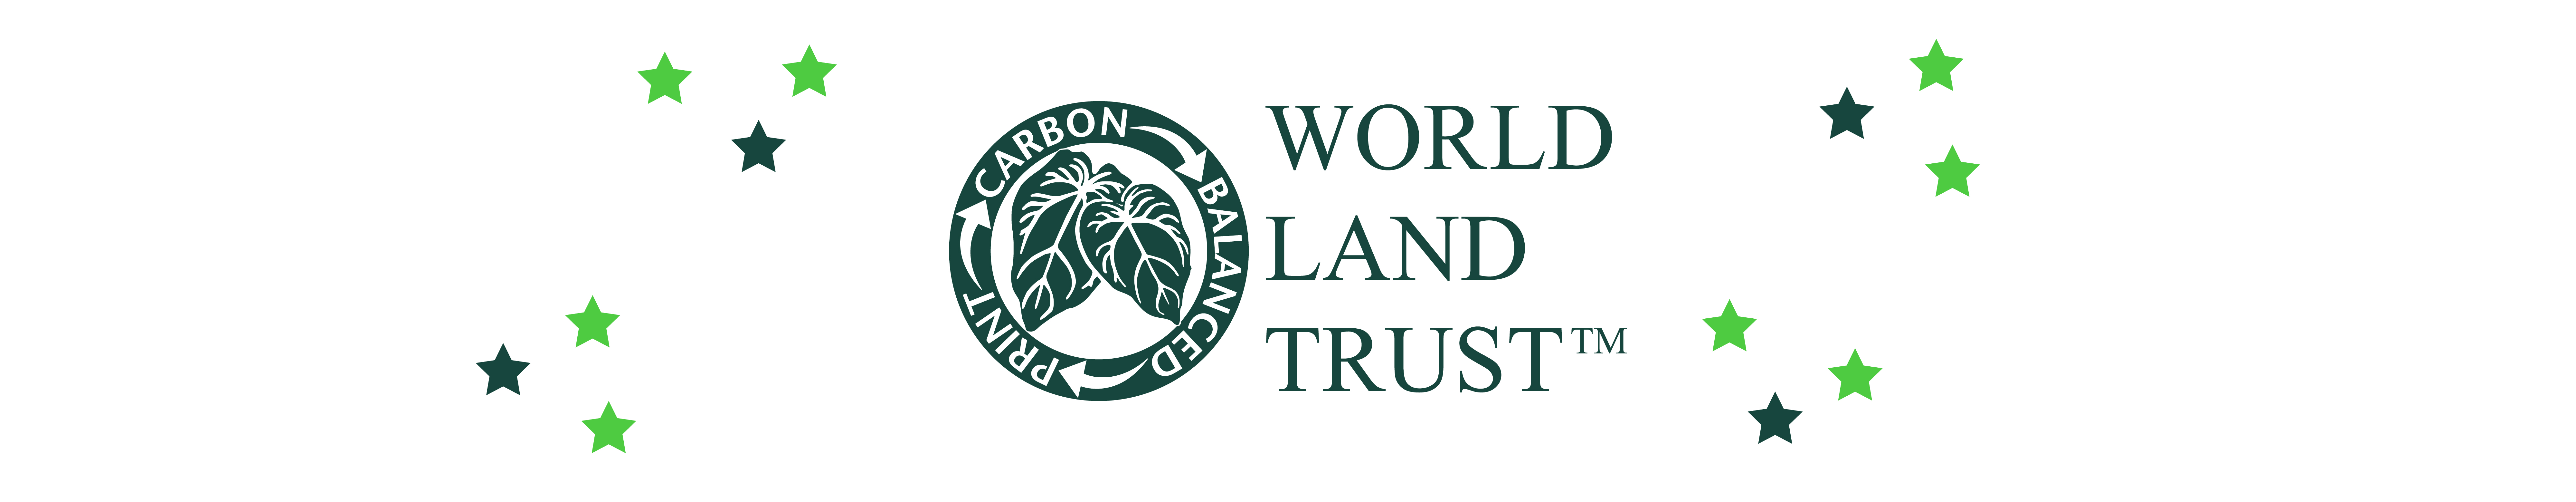 World Land Trust.jpg